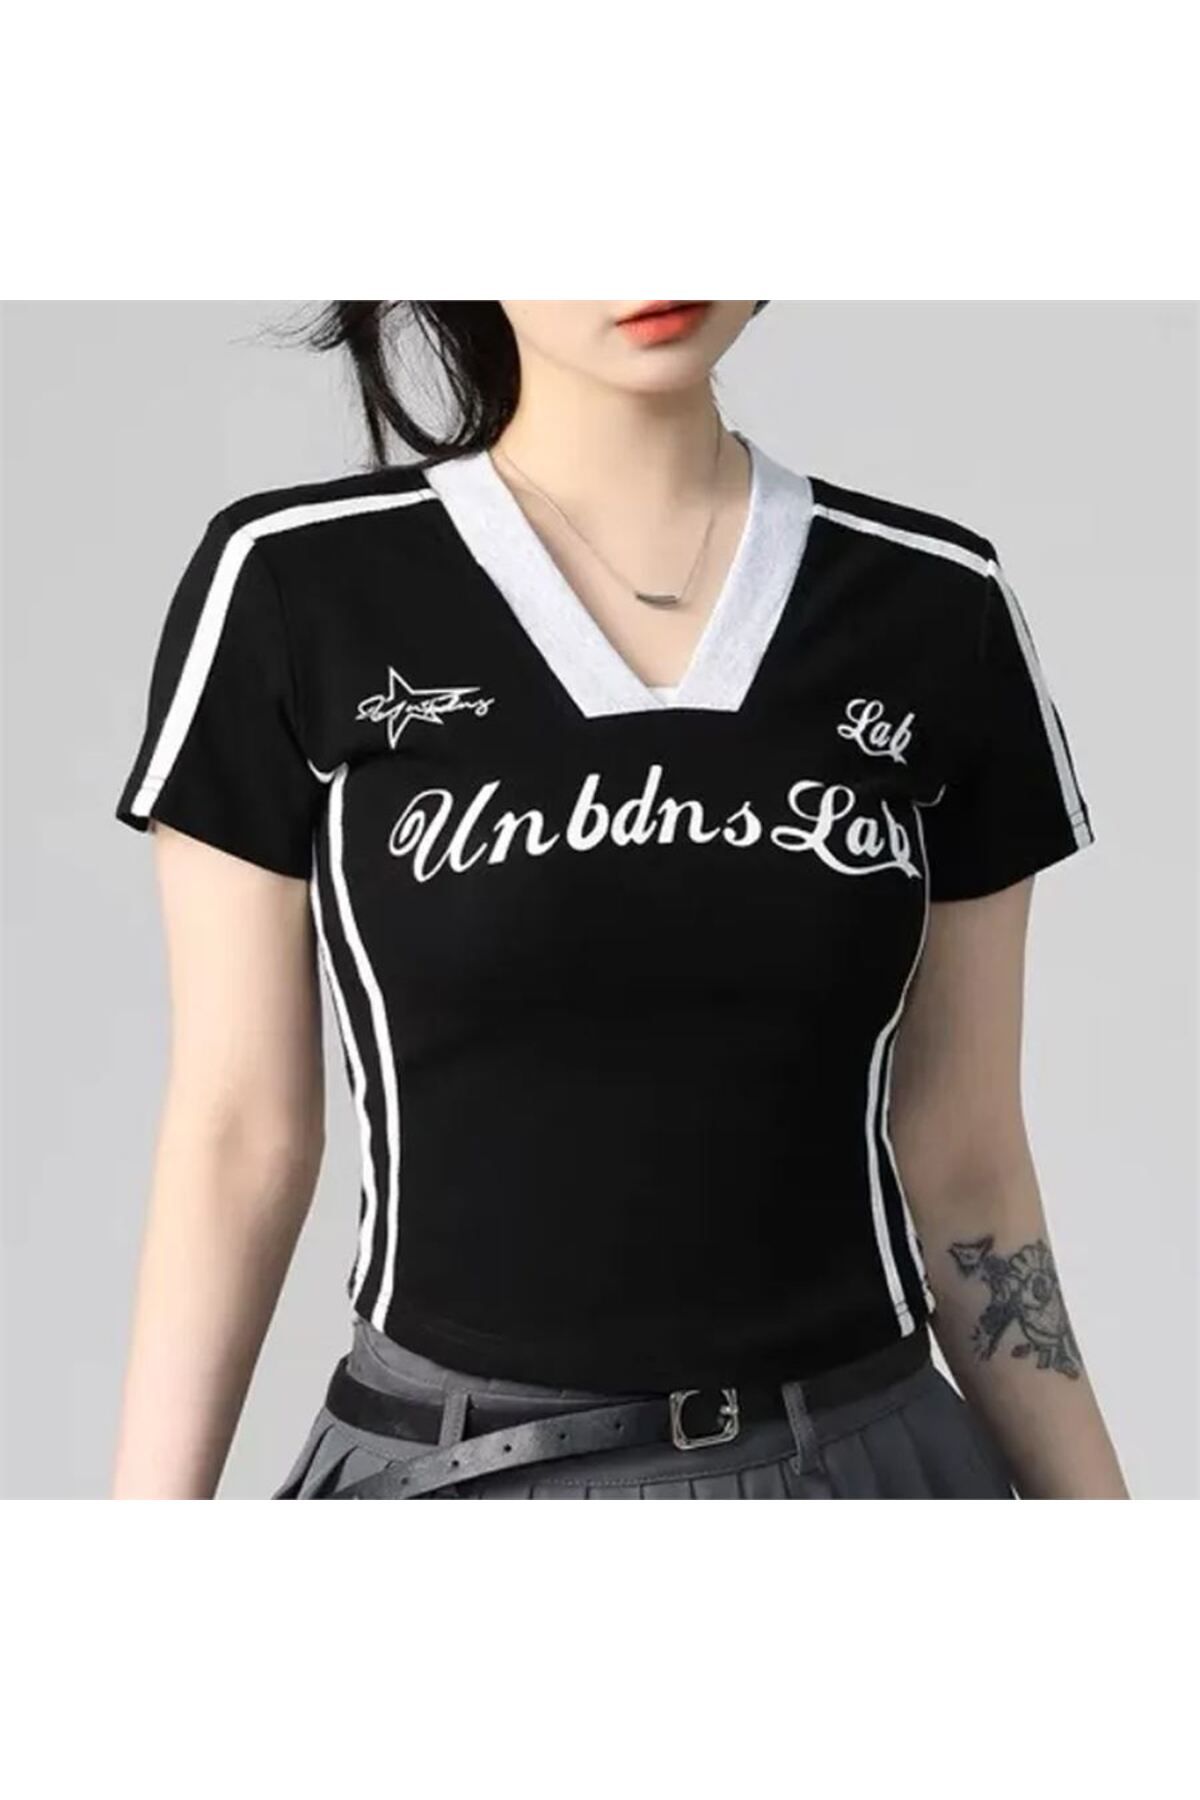 - Gofeel Trendyol T-Shirt Lab Uniform Half Unbdns Black